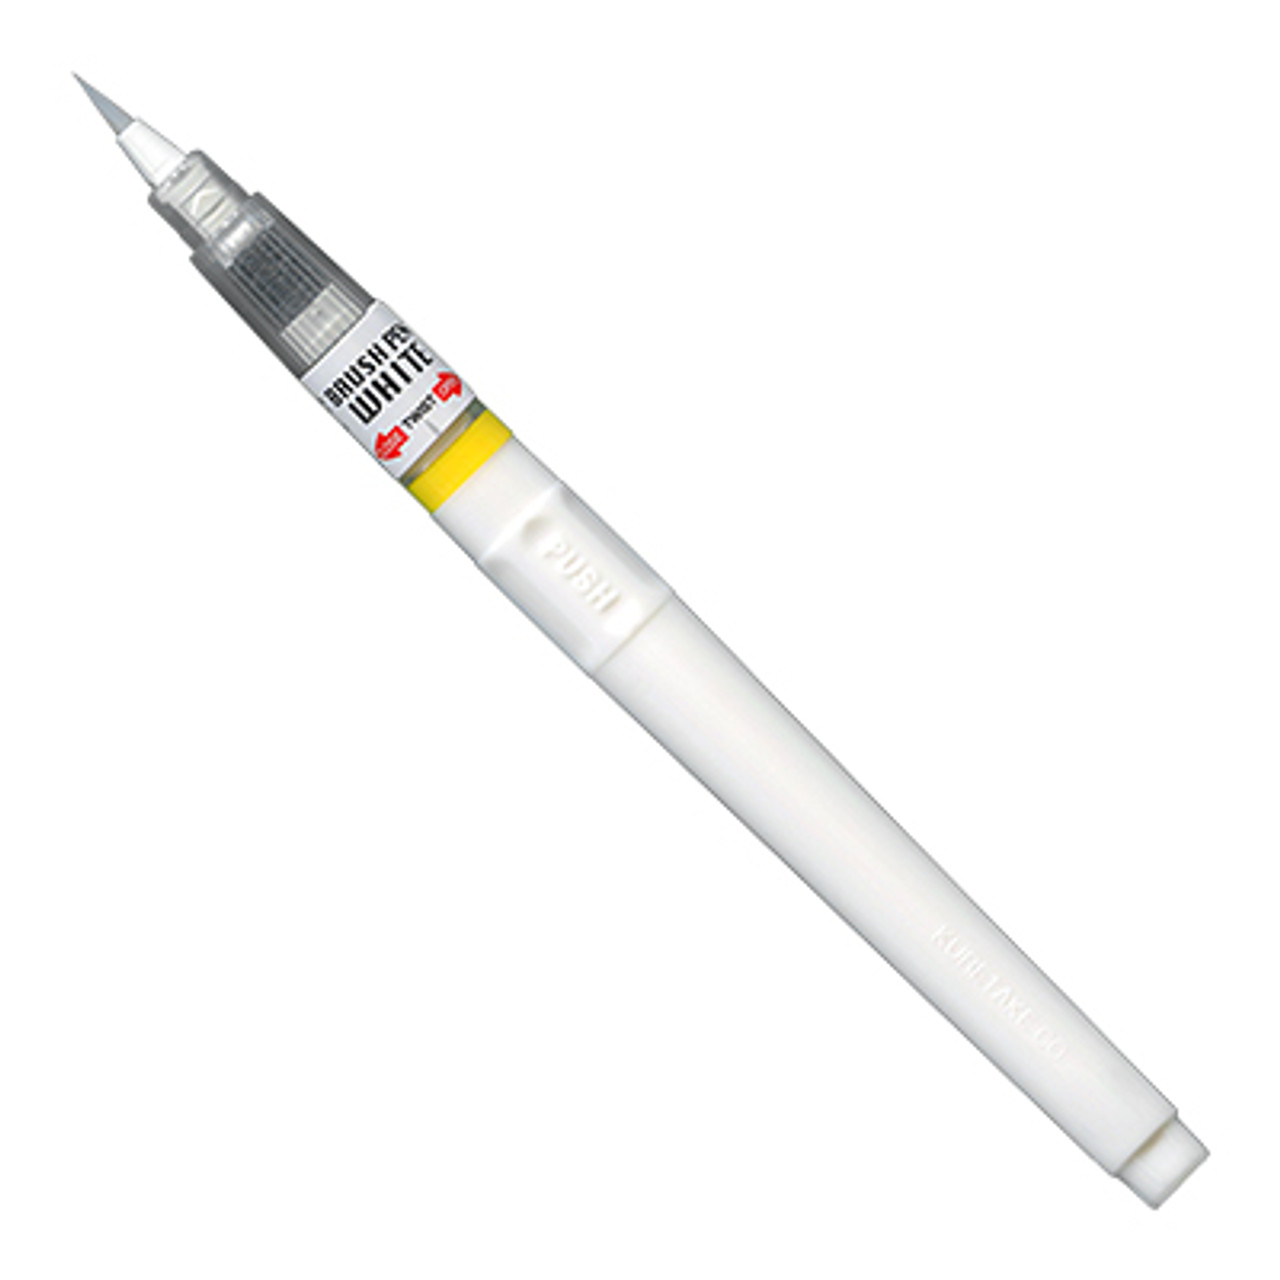 ZIG® Kuretake Cartoonist Fine Brush Pen No.24 – The Yard Art Supplies